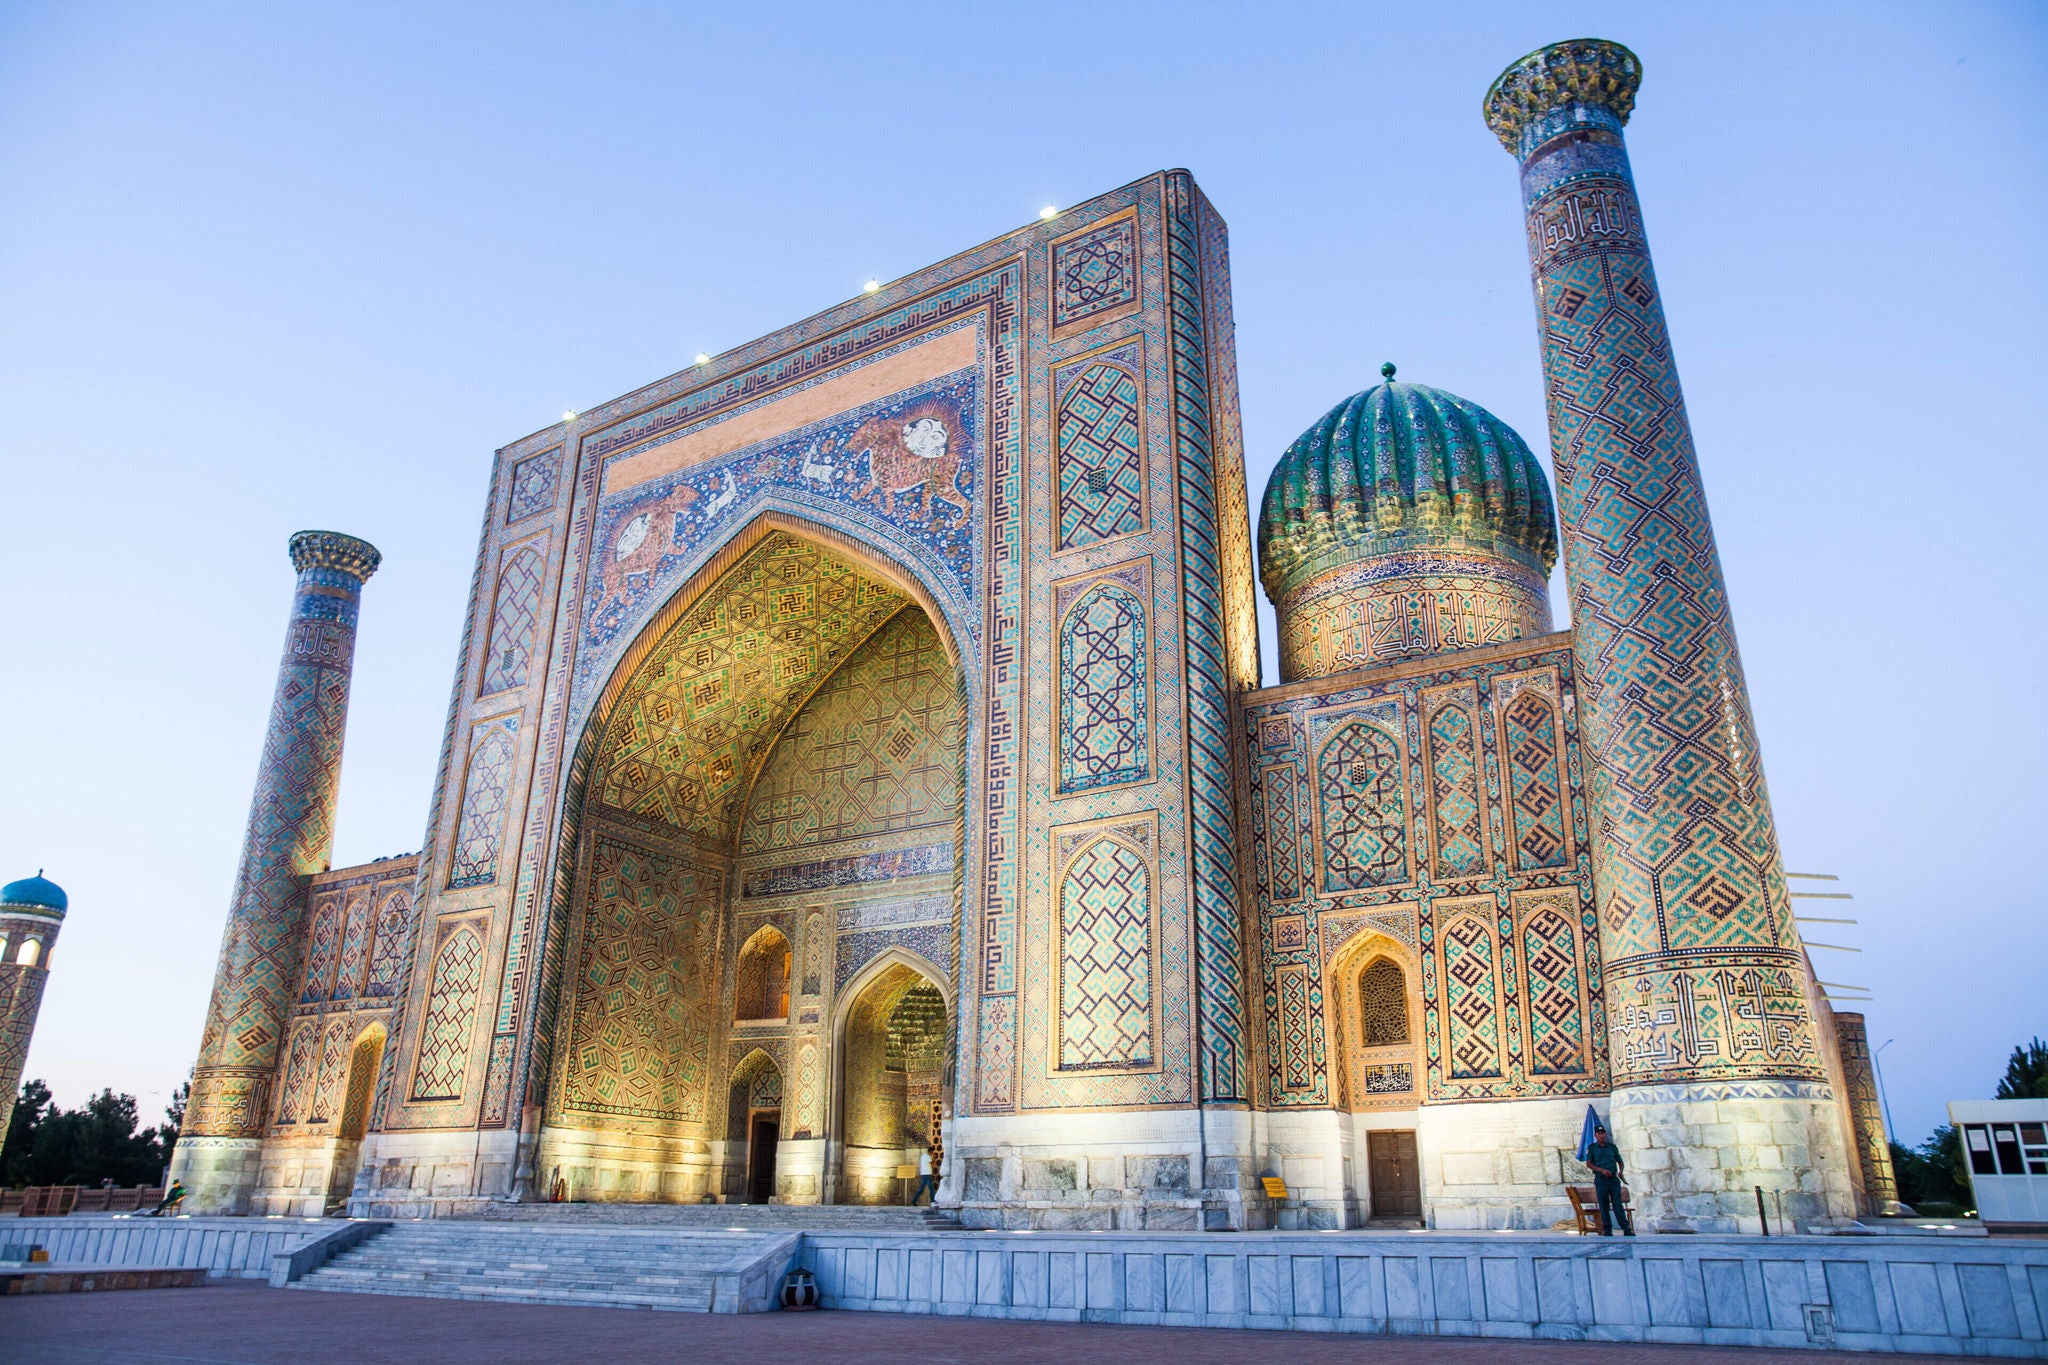 Color image of the Registan palace in Samarkand, Uzbekistan.